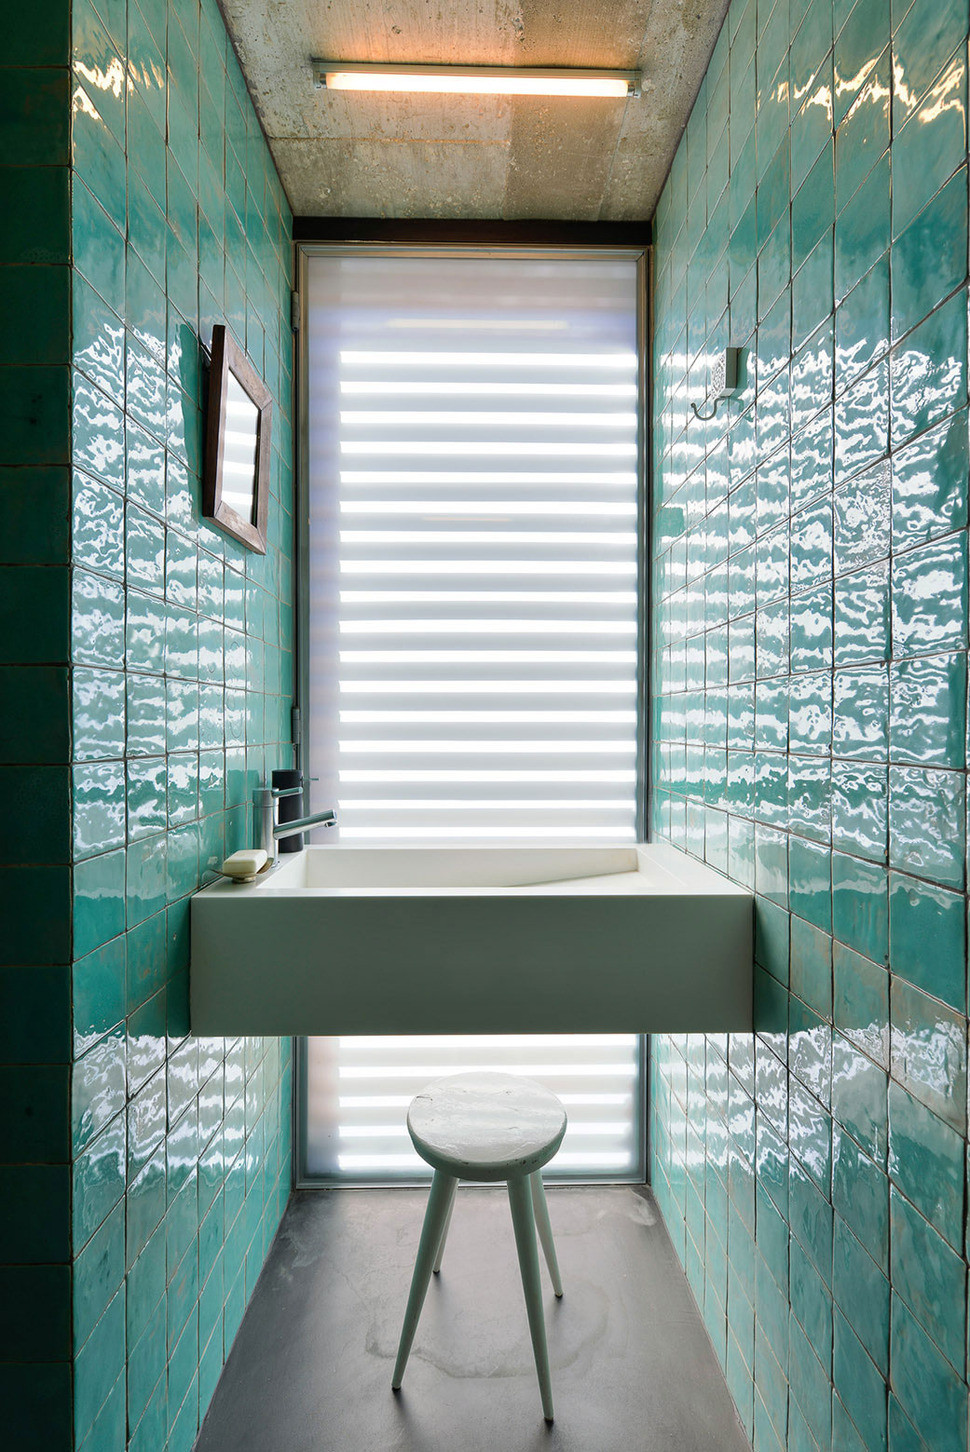 Modern Bathroom Tile Designs
 Top 10 Tile Design Ideas for a Modern Bathroom for 2015